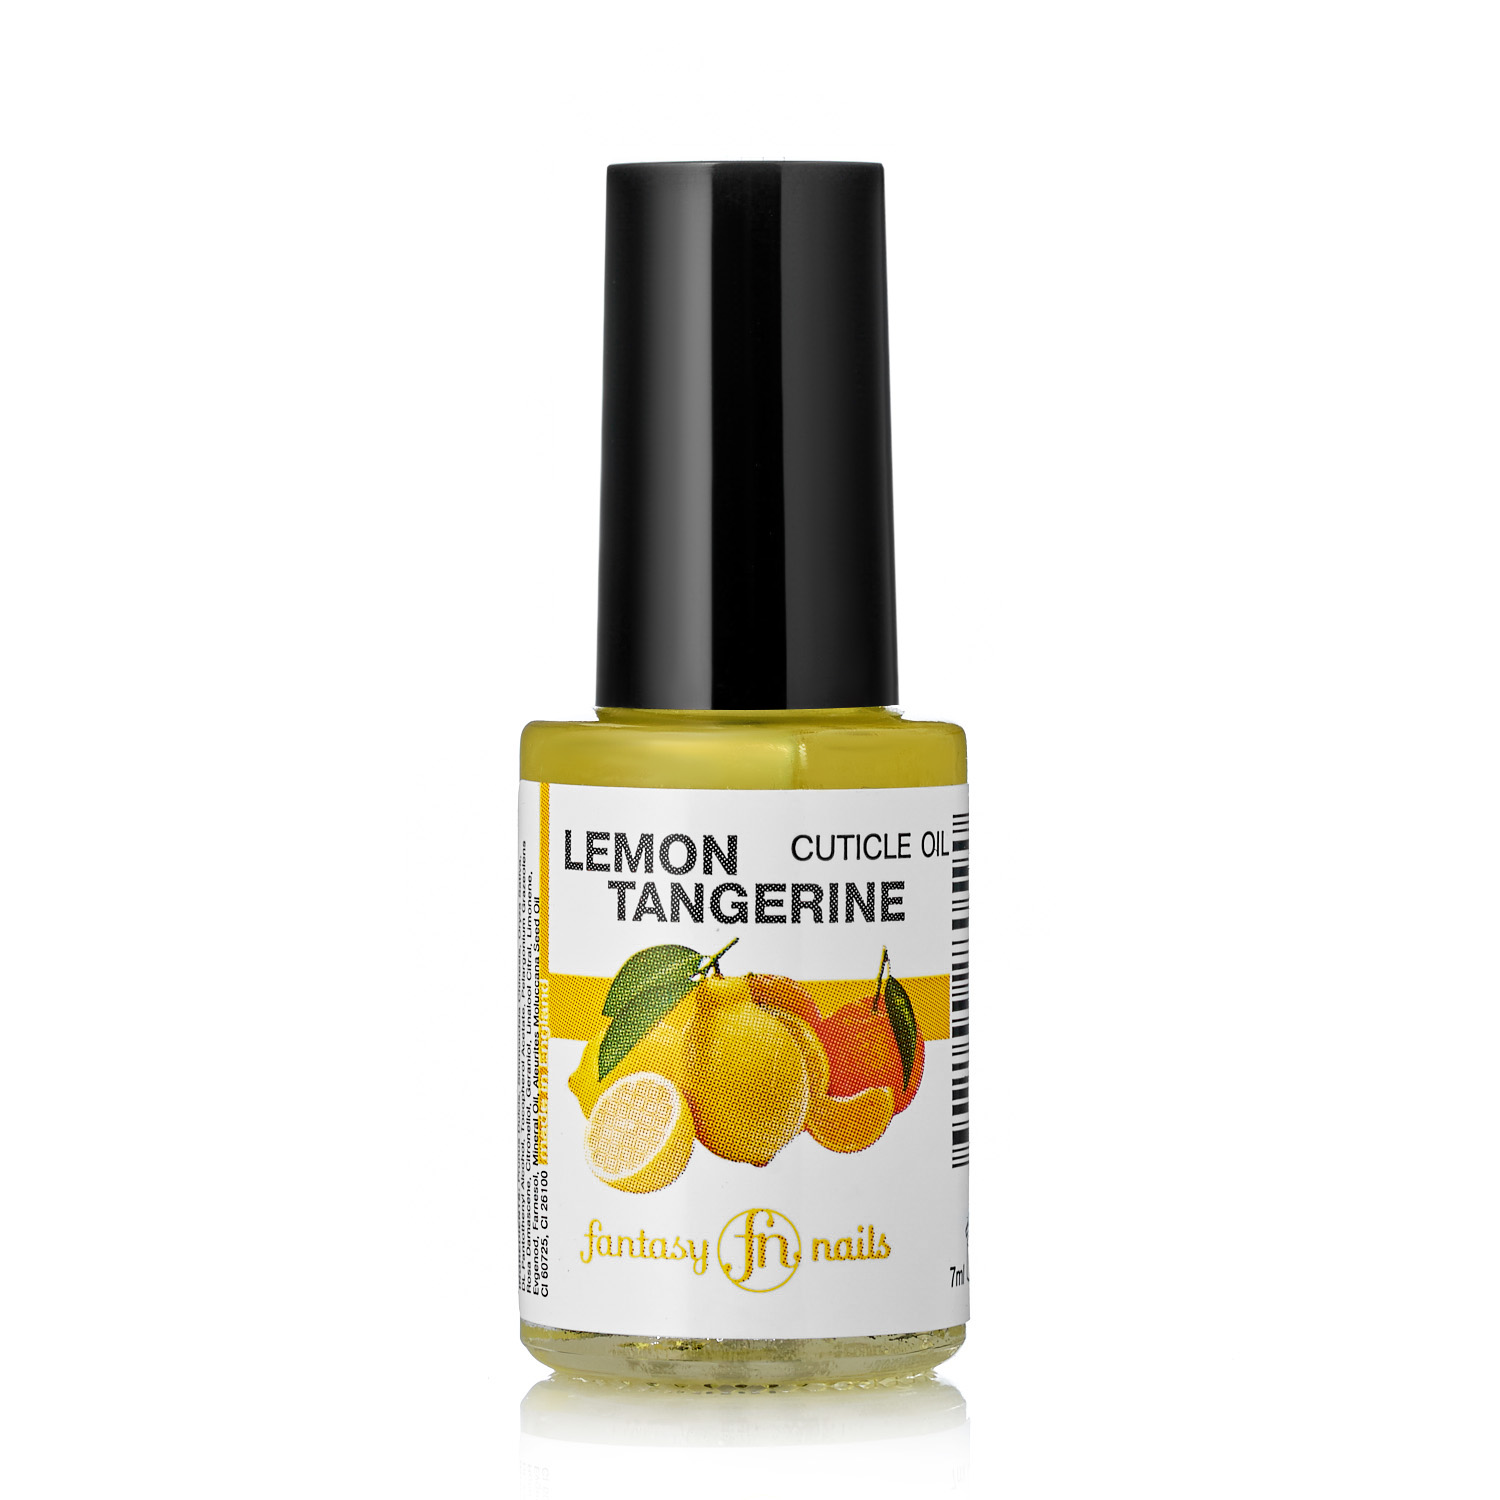 Масло для кутикулы Lemon/Tangerine («Лимон/Танжерин») 7 ml из каталога Препараты для ногтей в интернет-магазине BPW.style